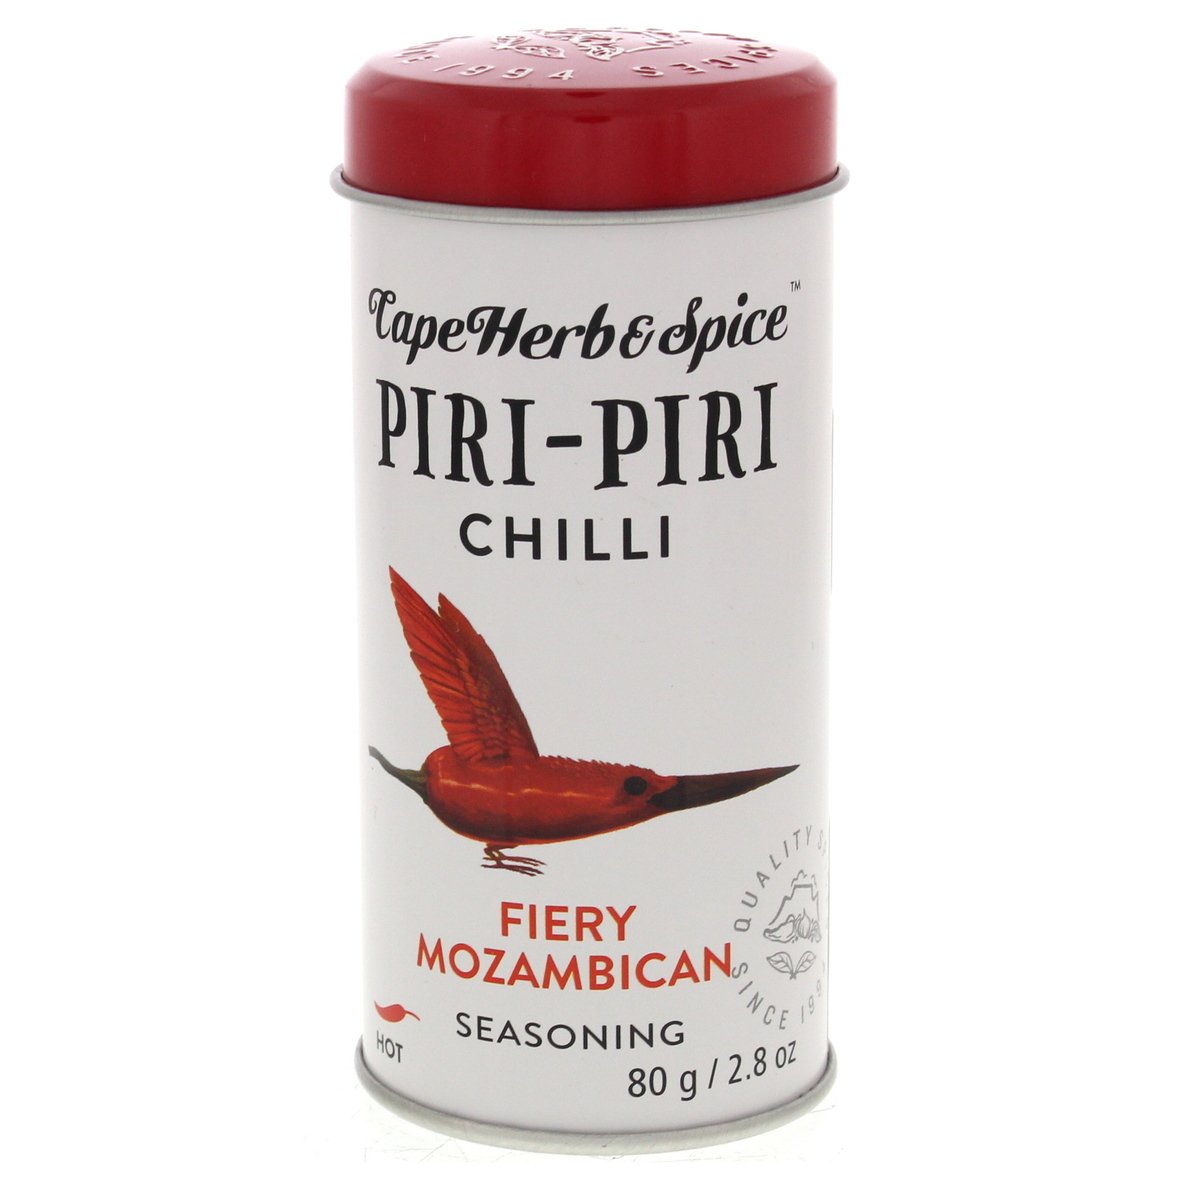 Cape Herb & Spice Piri-Piri Chilli Fiery Mozambican Seasoning 80g